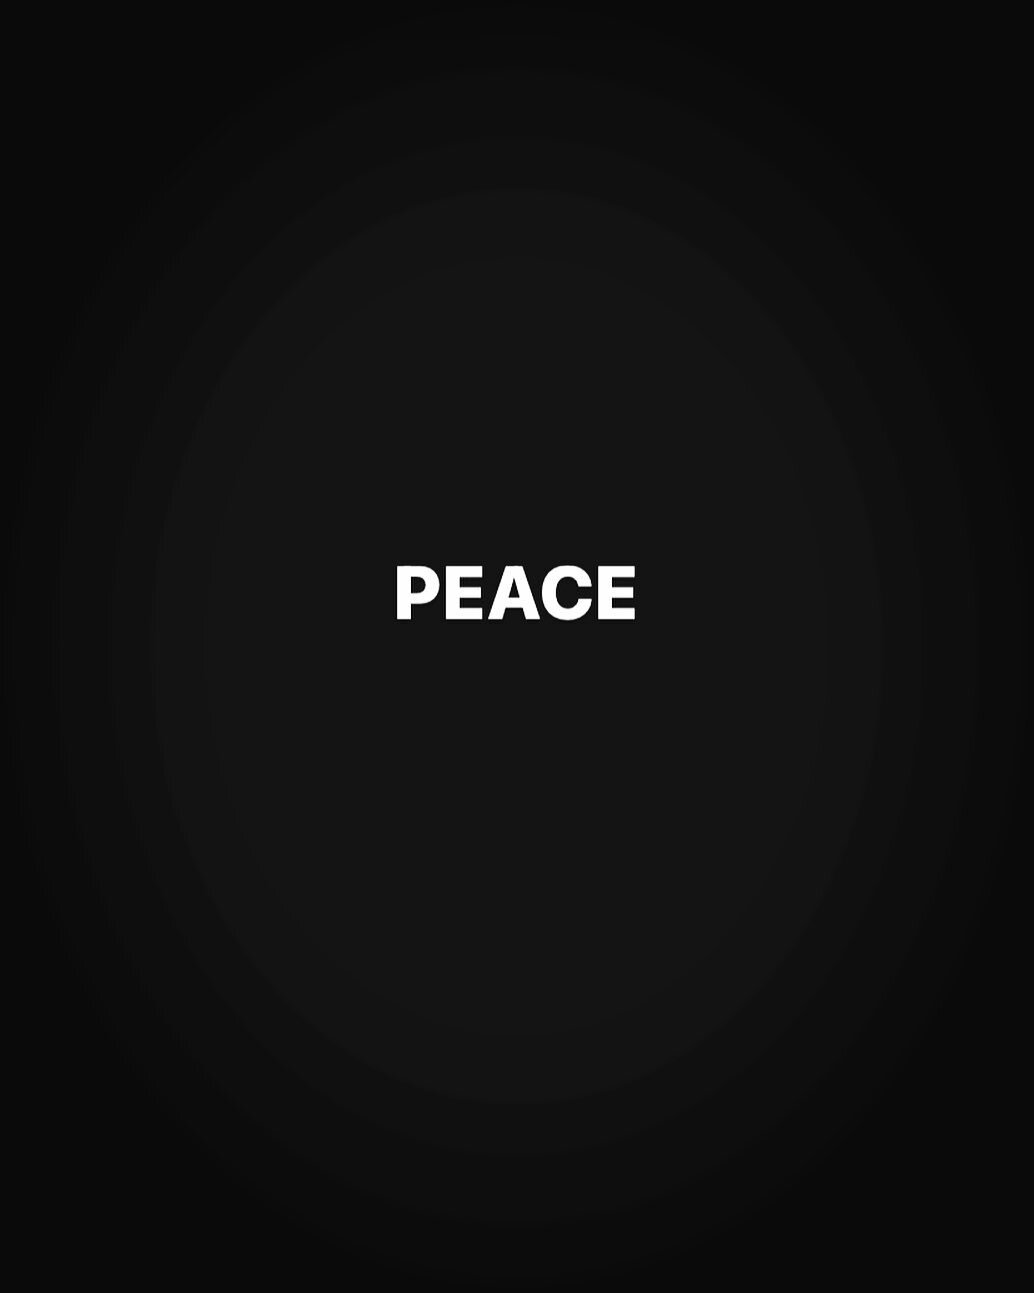 #speachless #standforukraine #peace #nowords #loveandpeace #ukraine